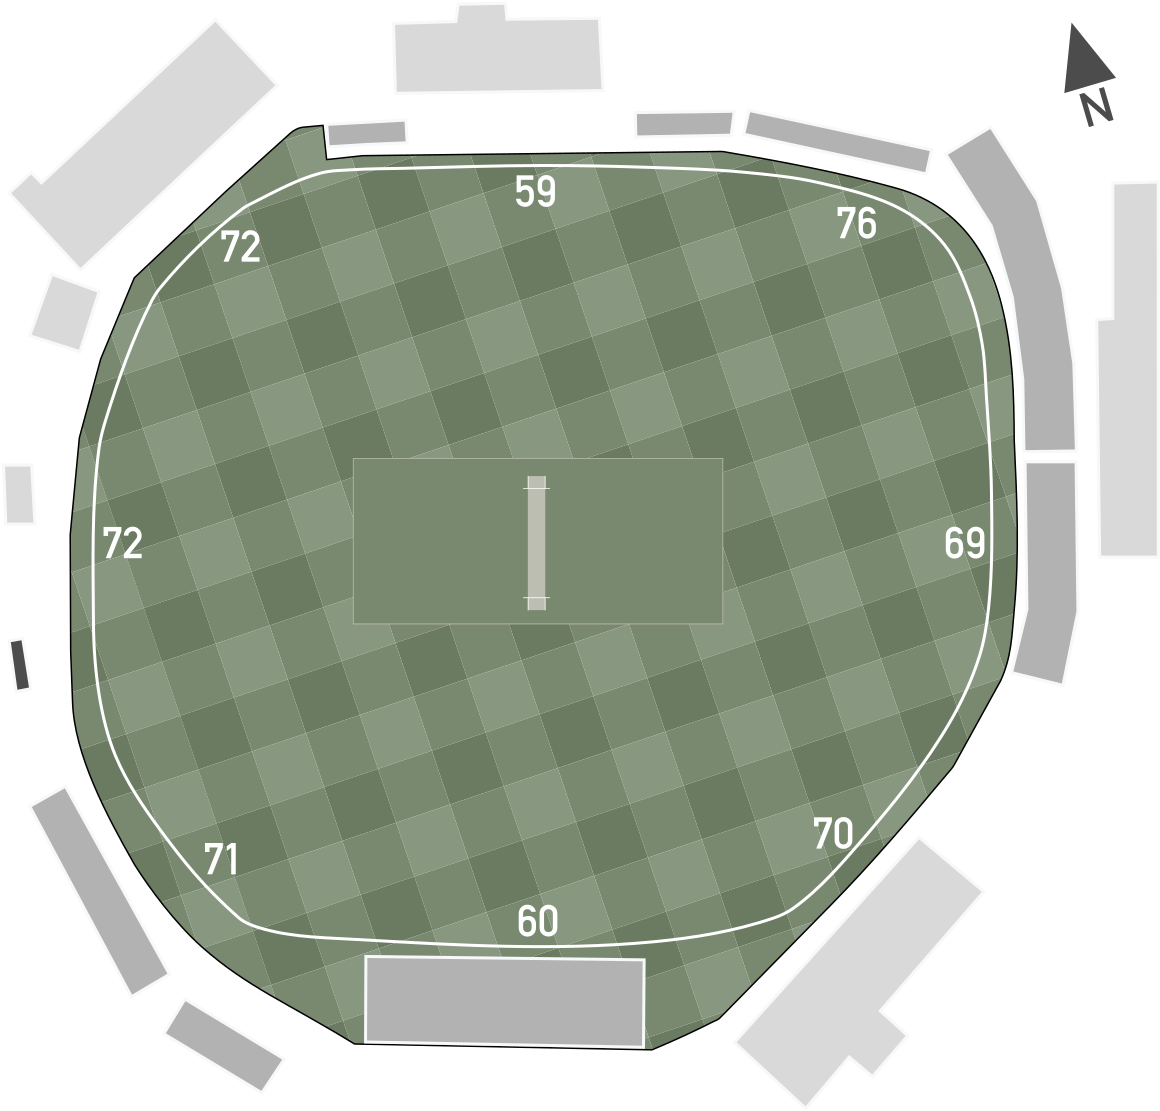 A Map Of A Cricket Stadium